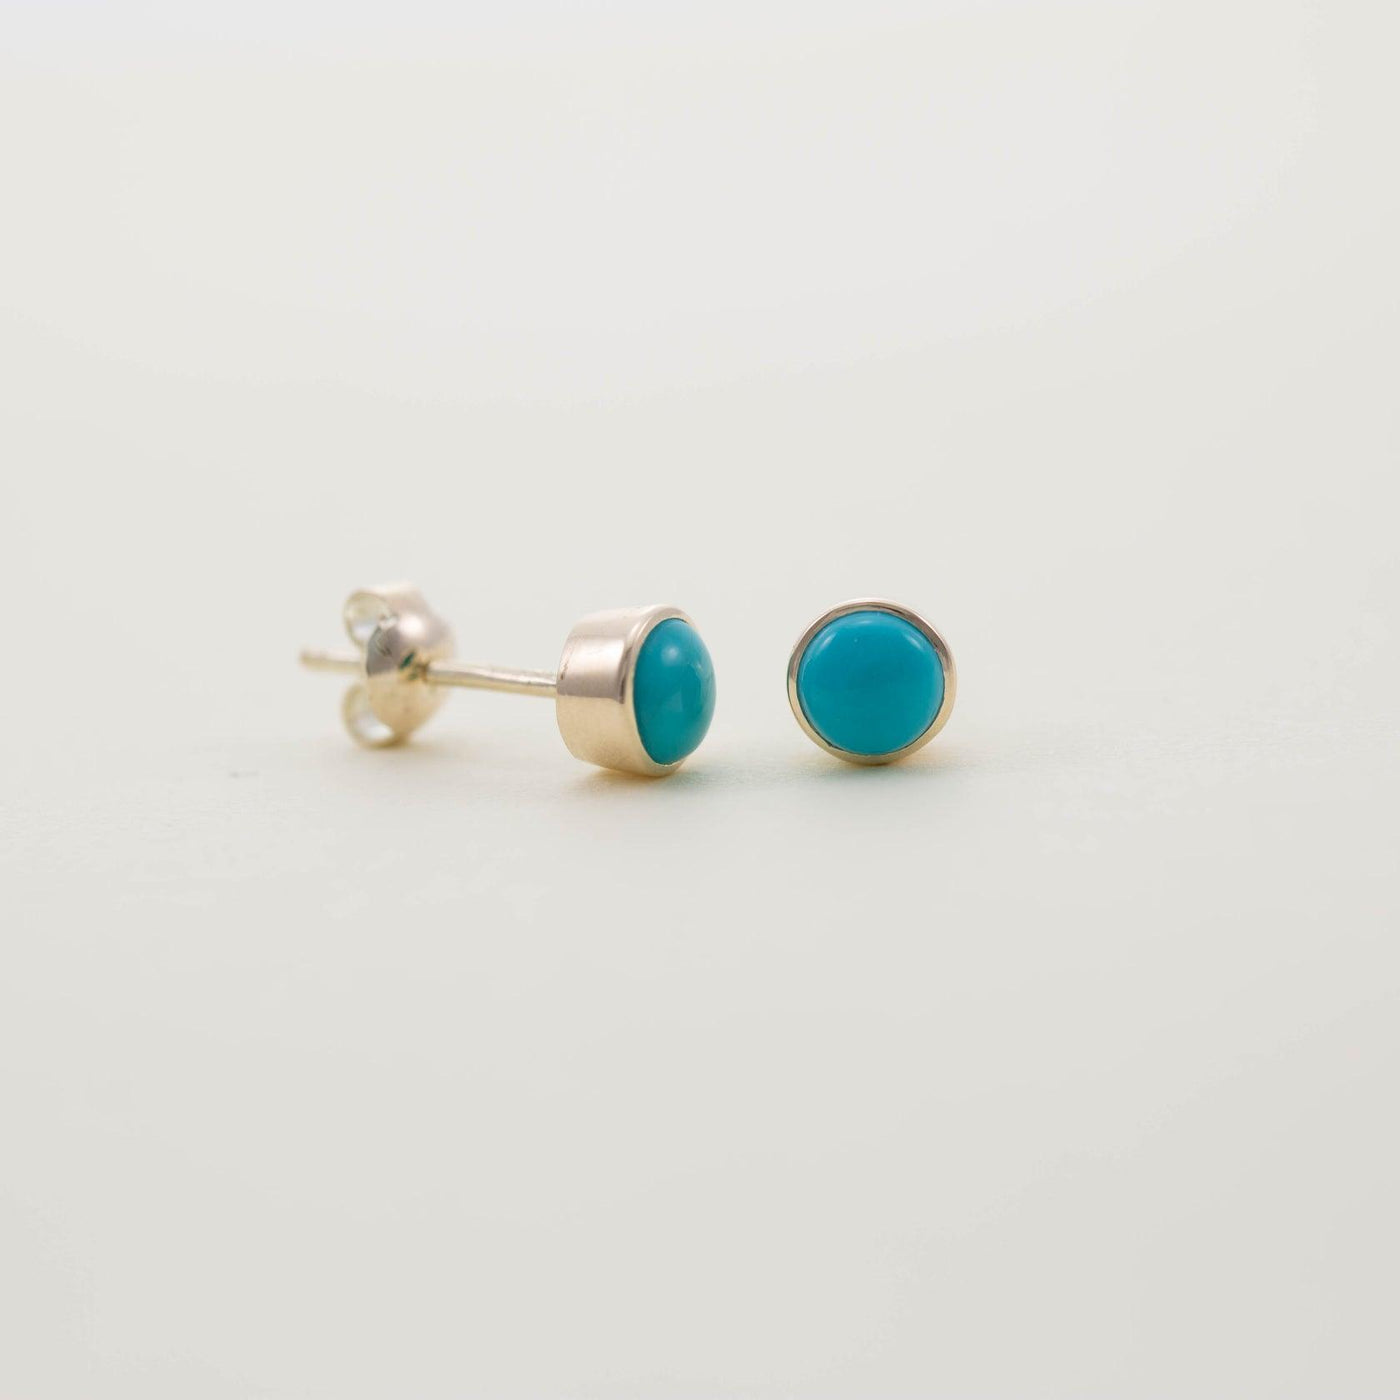 Simon Alexander 9ct Gold Turquoise Stud Earrings - Rococo Jewellery